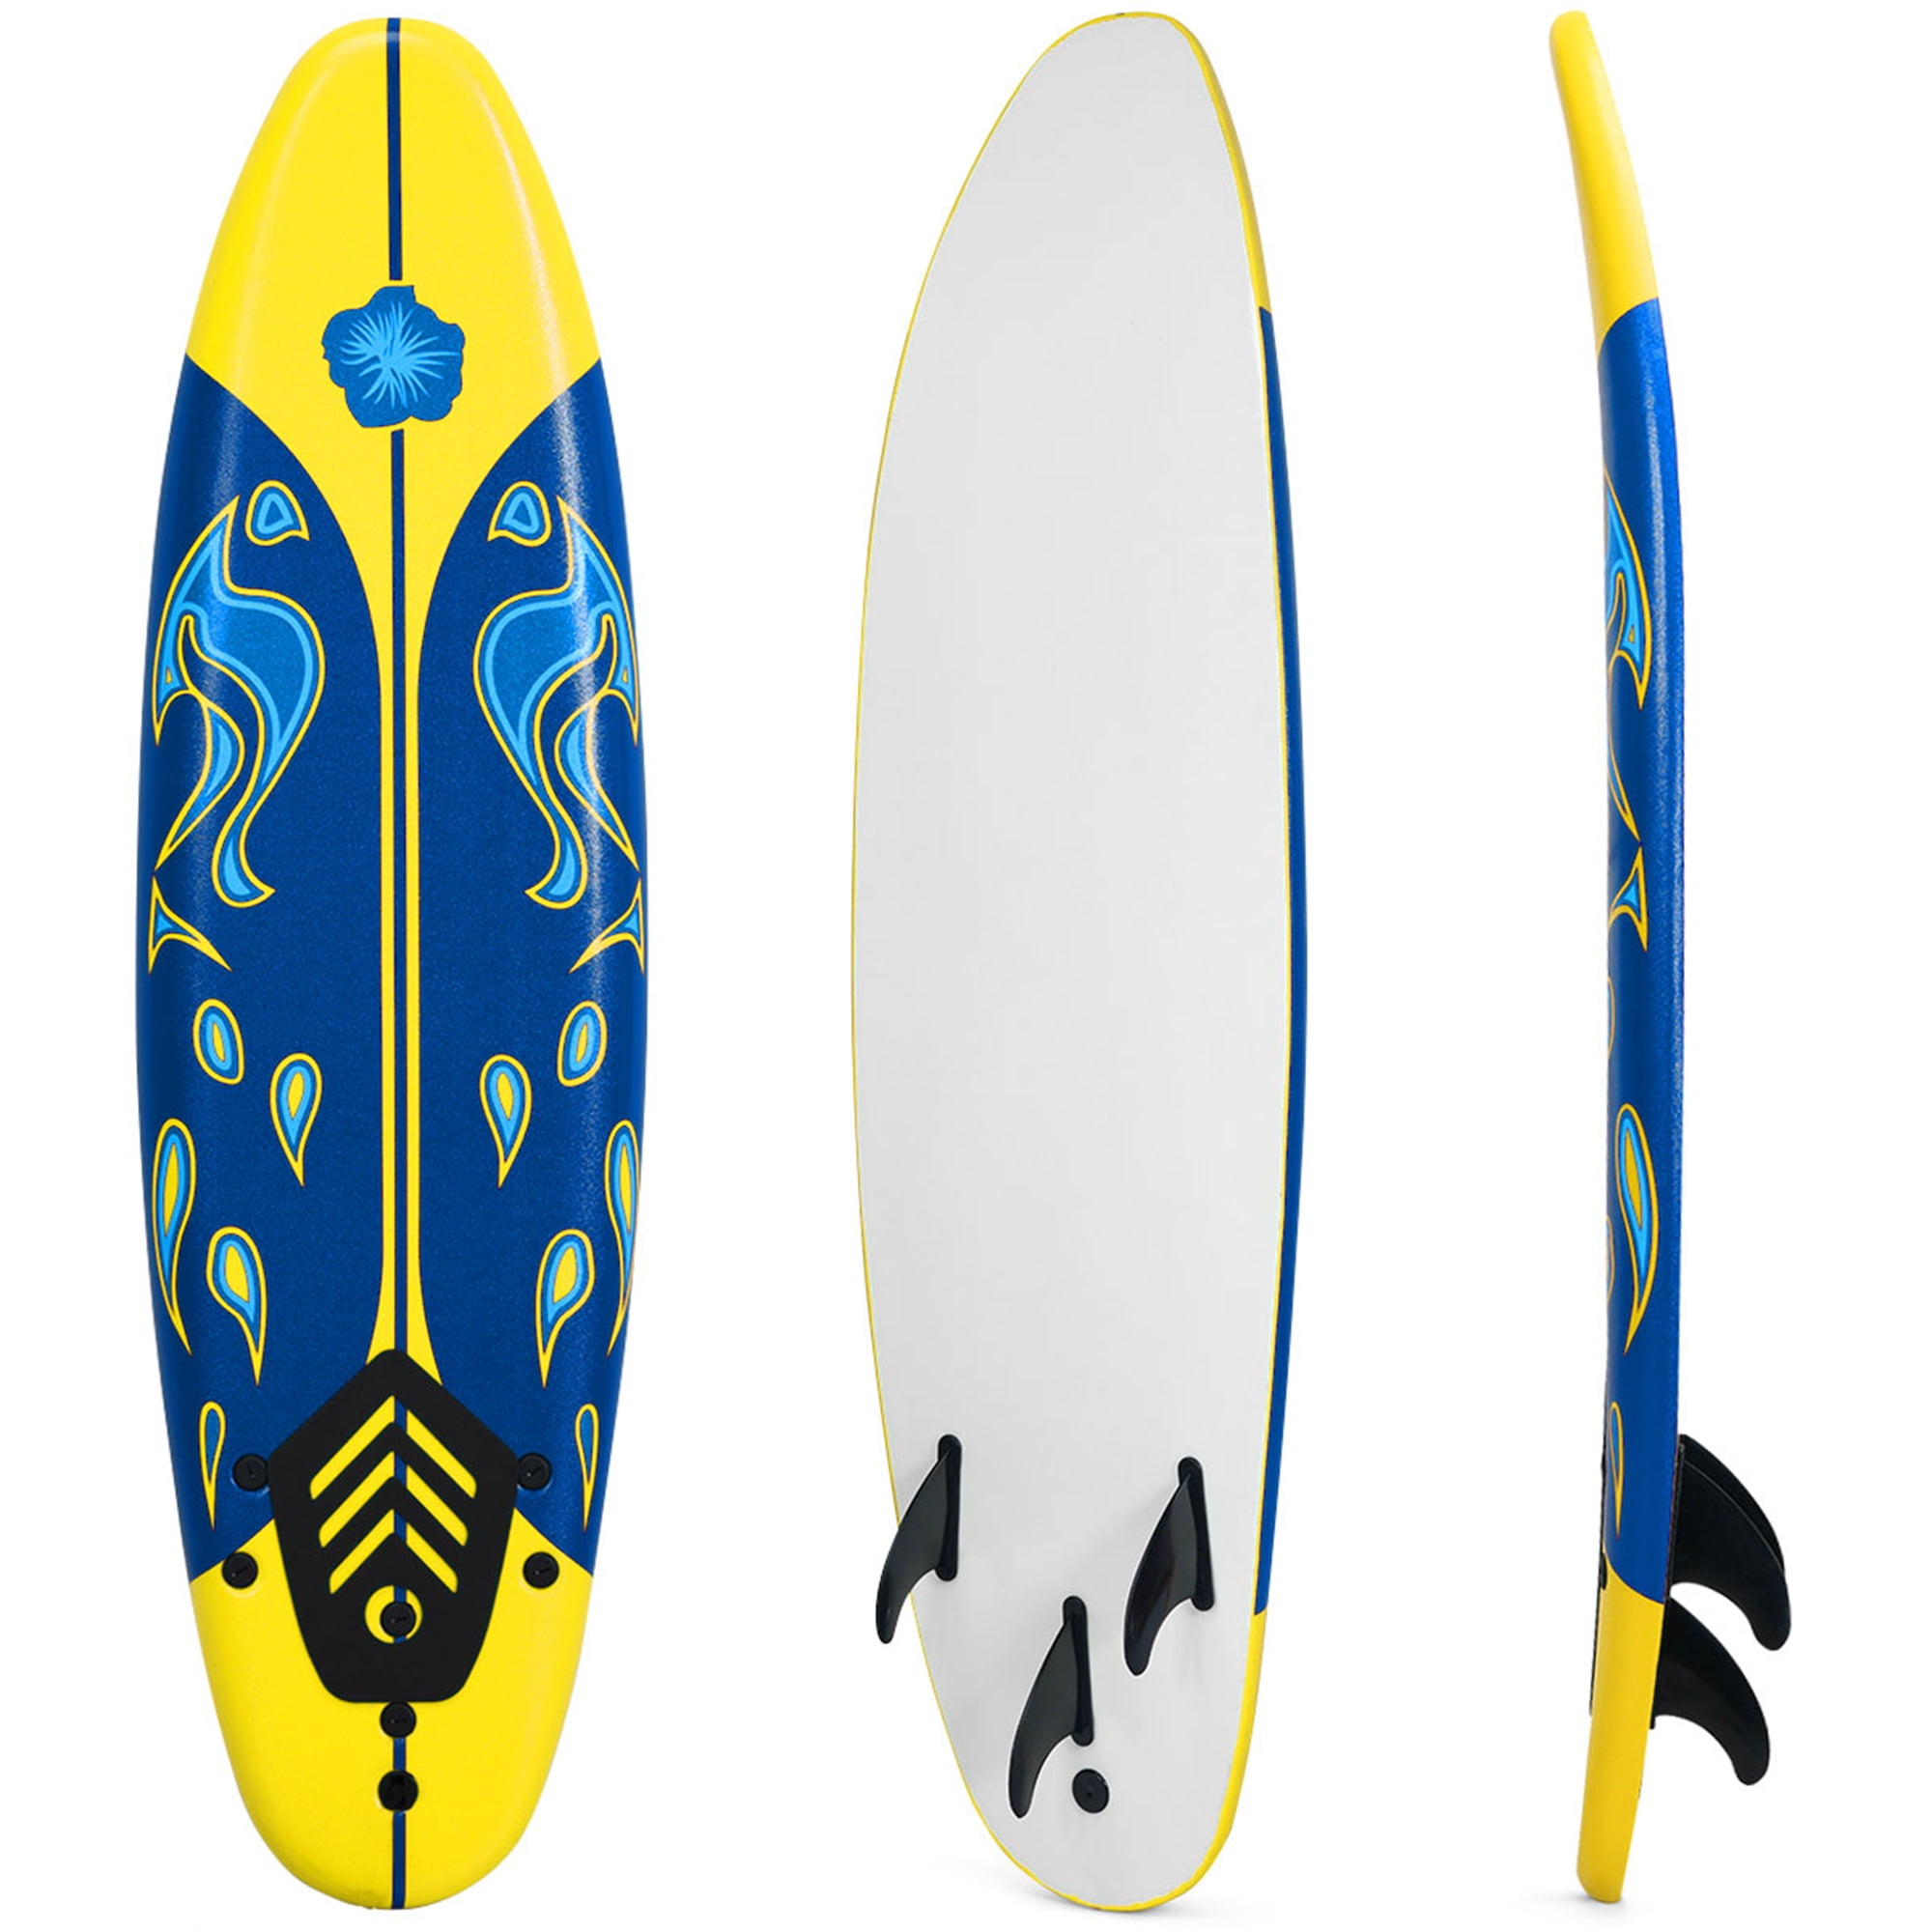 Culture Supply Surfboard Leash : 6ft Comp 6 ft Reg 8ft 7ft 10ft ~1yr Warranty 9ft 6 Sizes 